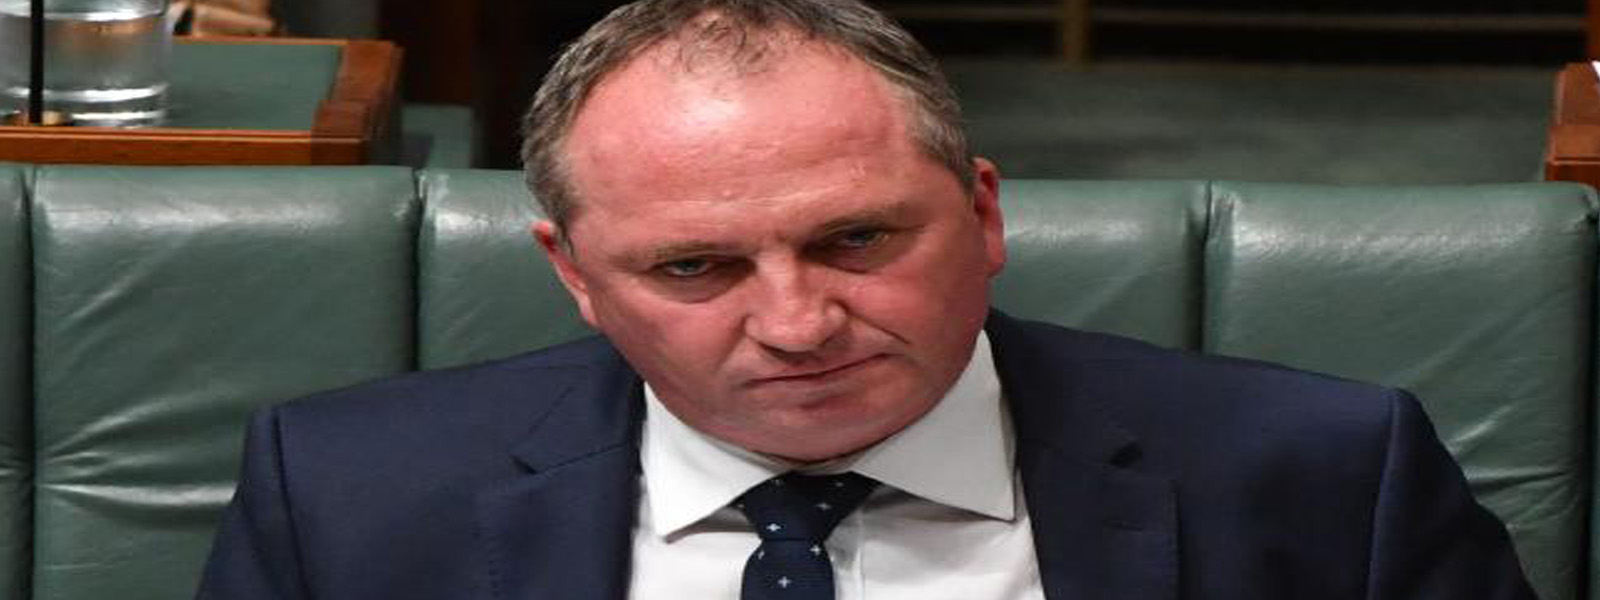 Australia PM 'inept', own Deputy says